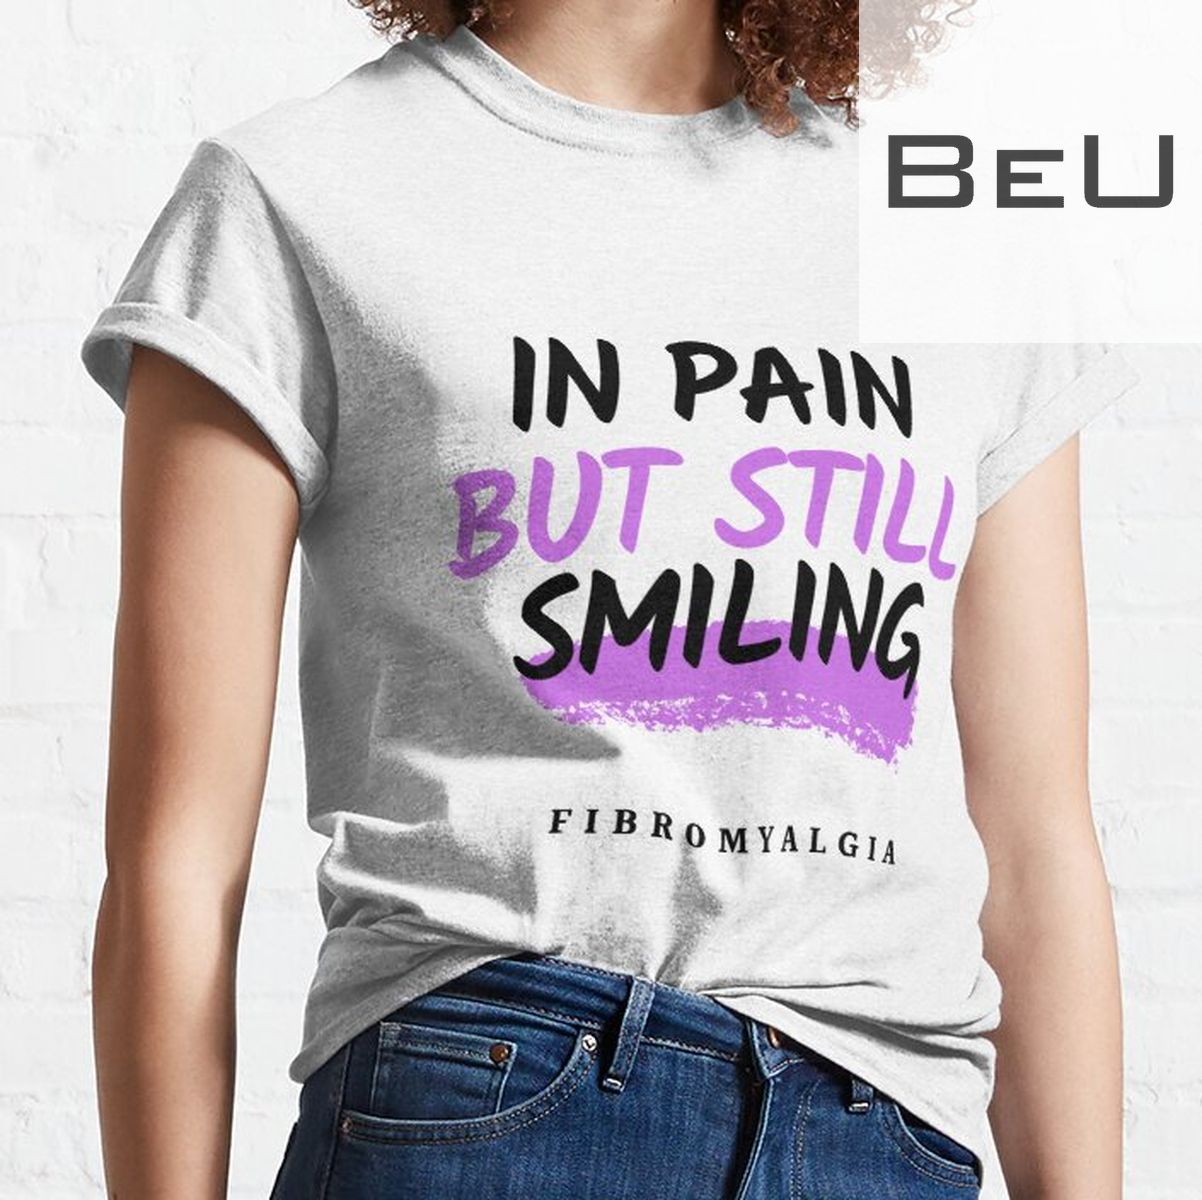 In Pain But Still Smiling-fibromyalgia Awareness T-shirt